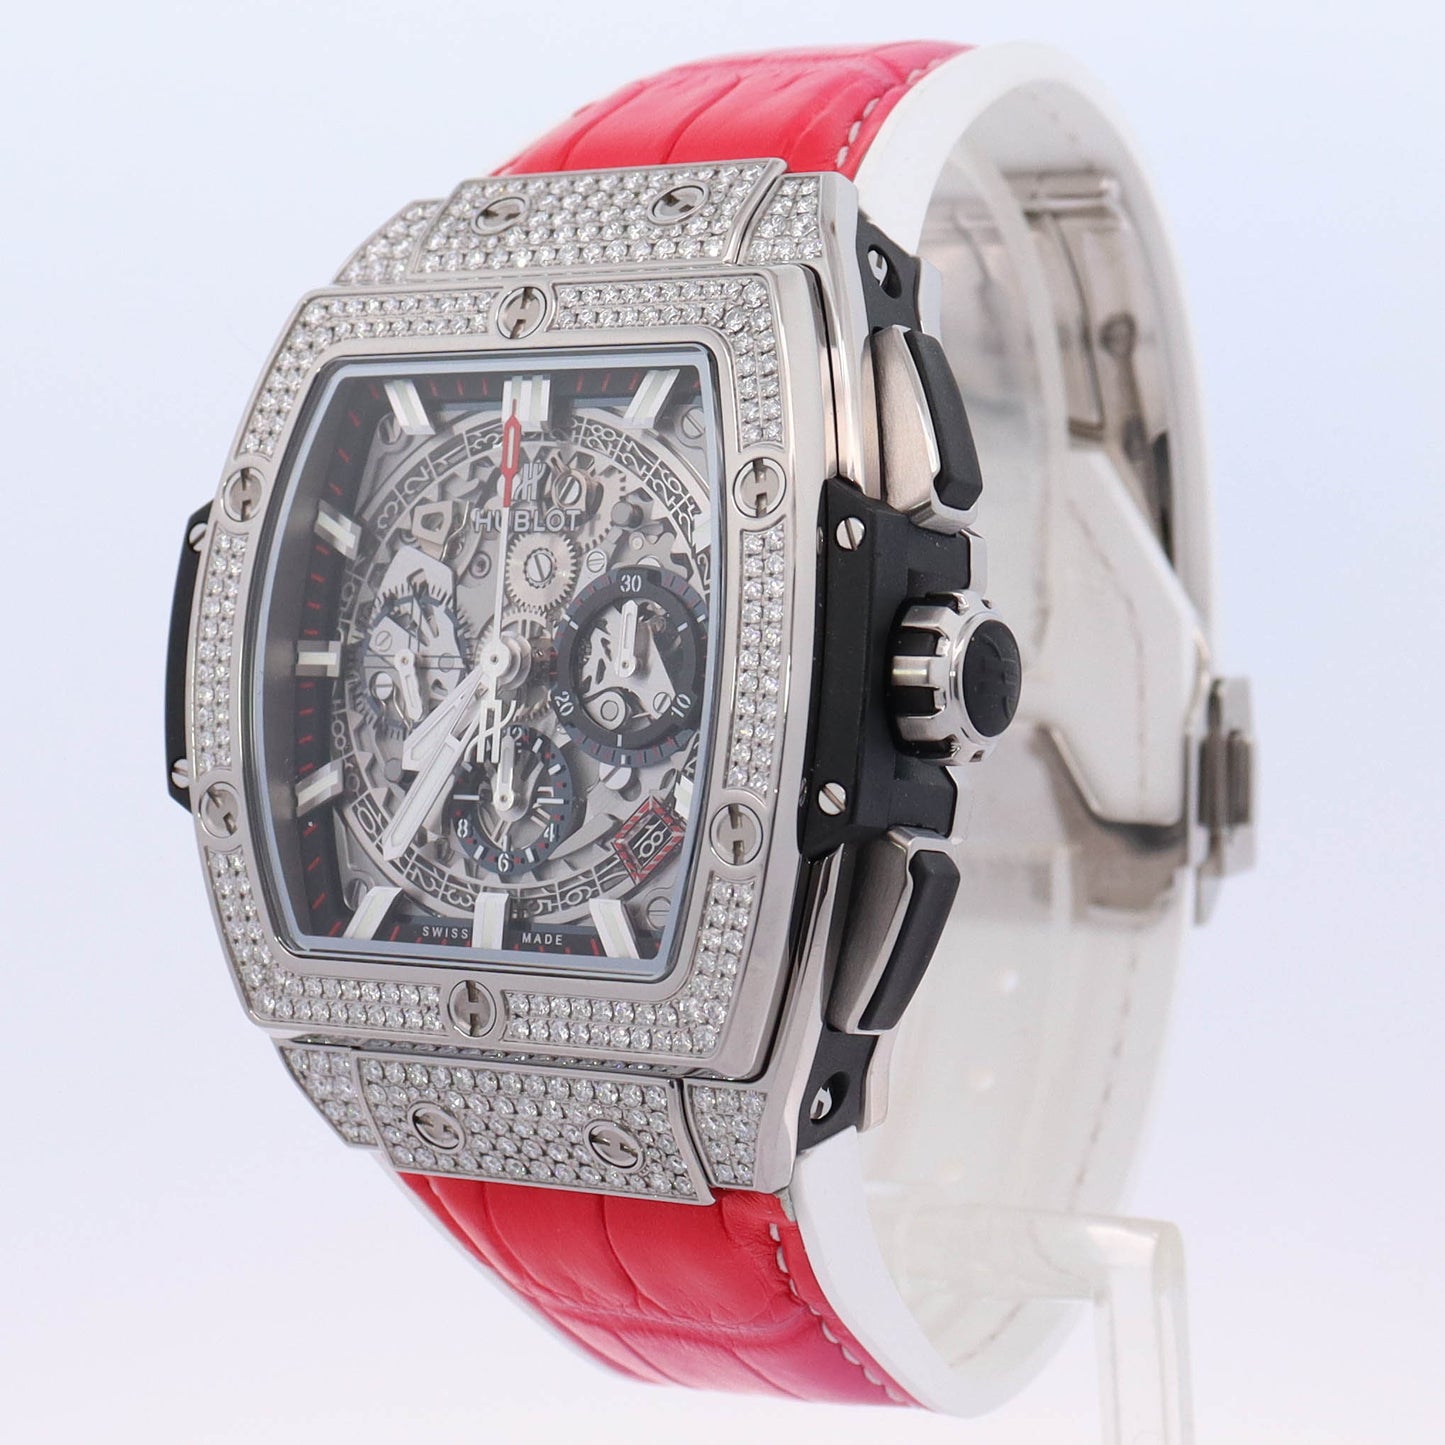 Hublot Mens Spirit of Big Bang Titanium 42mm Skeleton Dial Watch Reference#: 641.NX.0173.LR.1704 - Happy Jewelers Fine Jewelry Lifetime Warranty